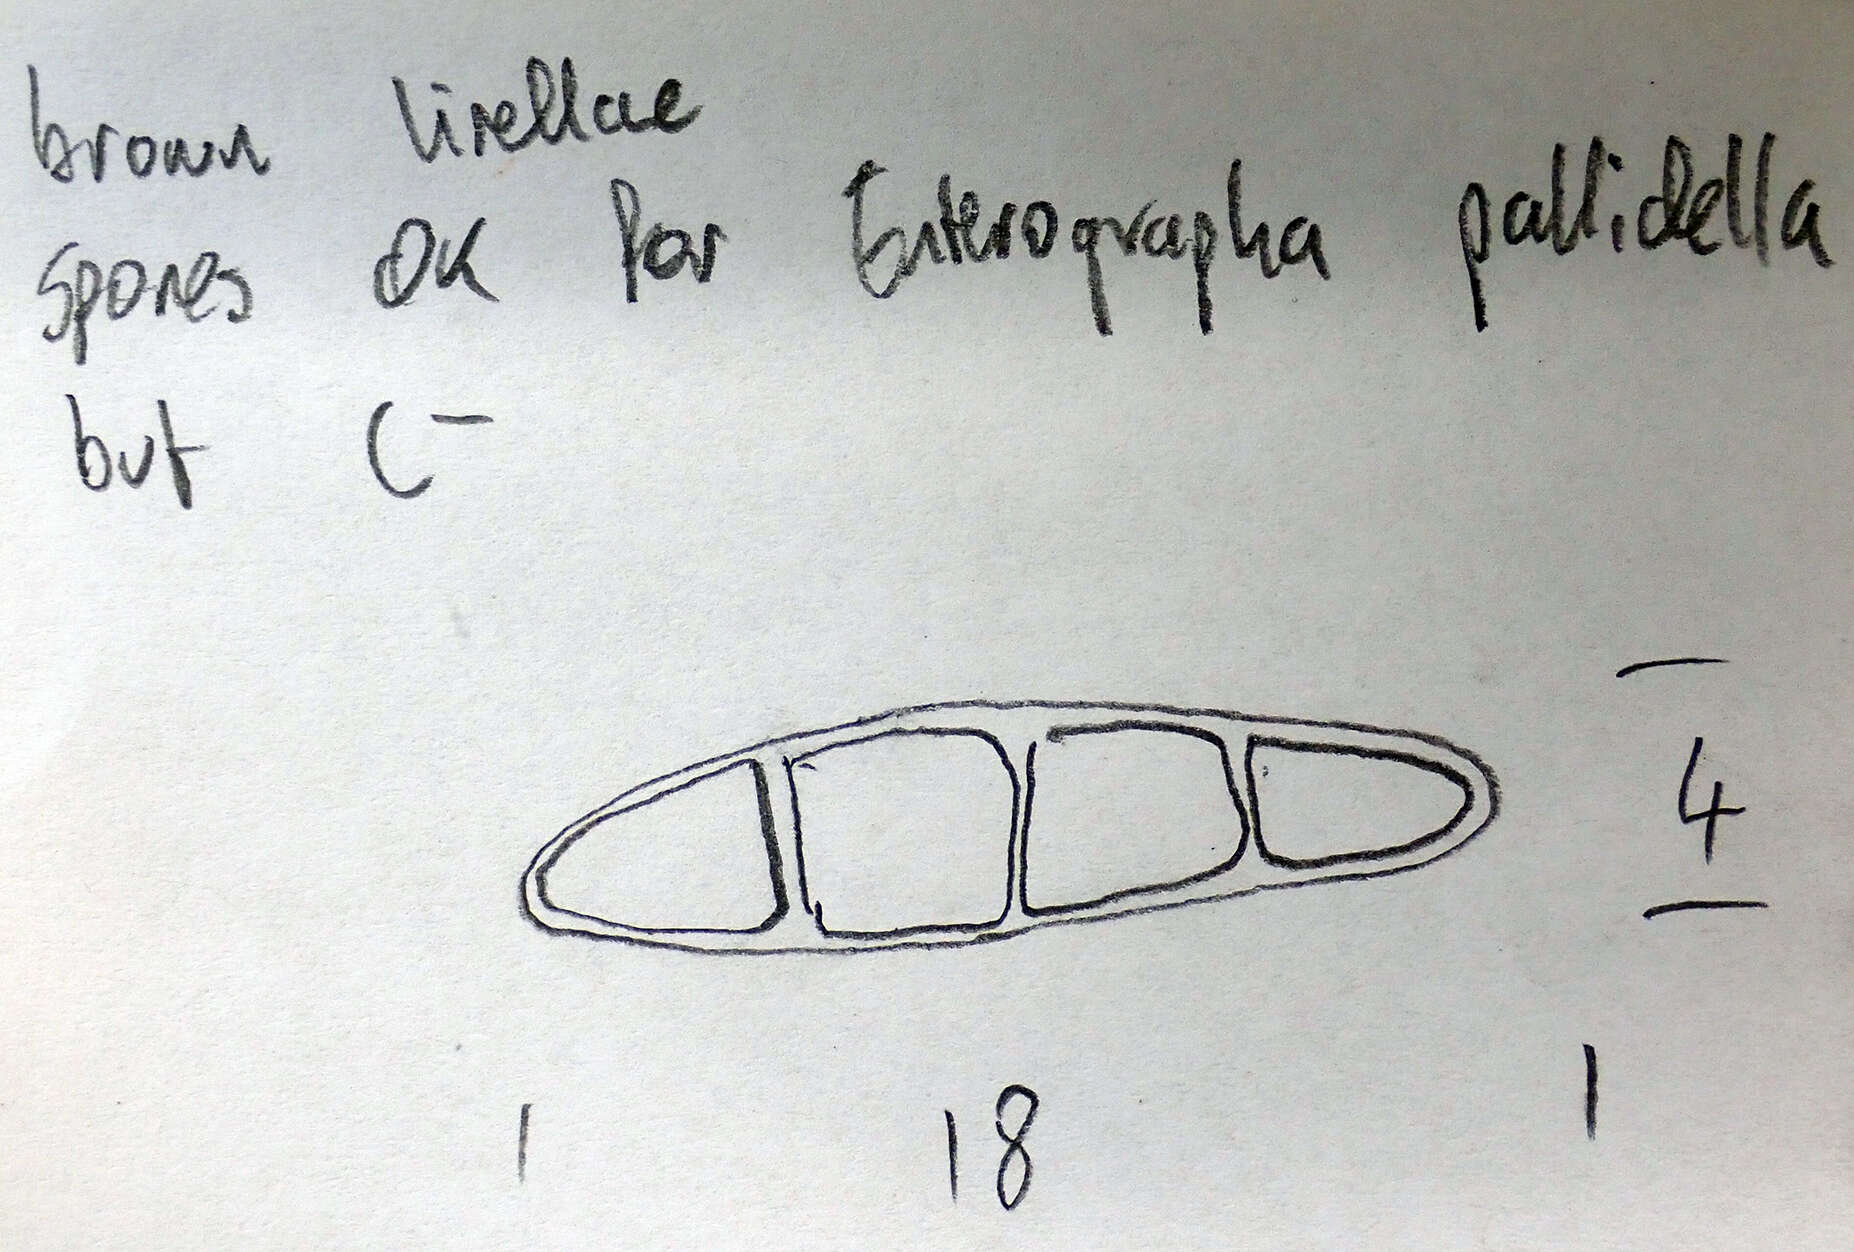 Image of Enterographa pallidella